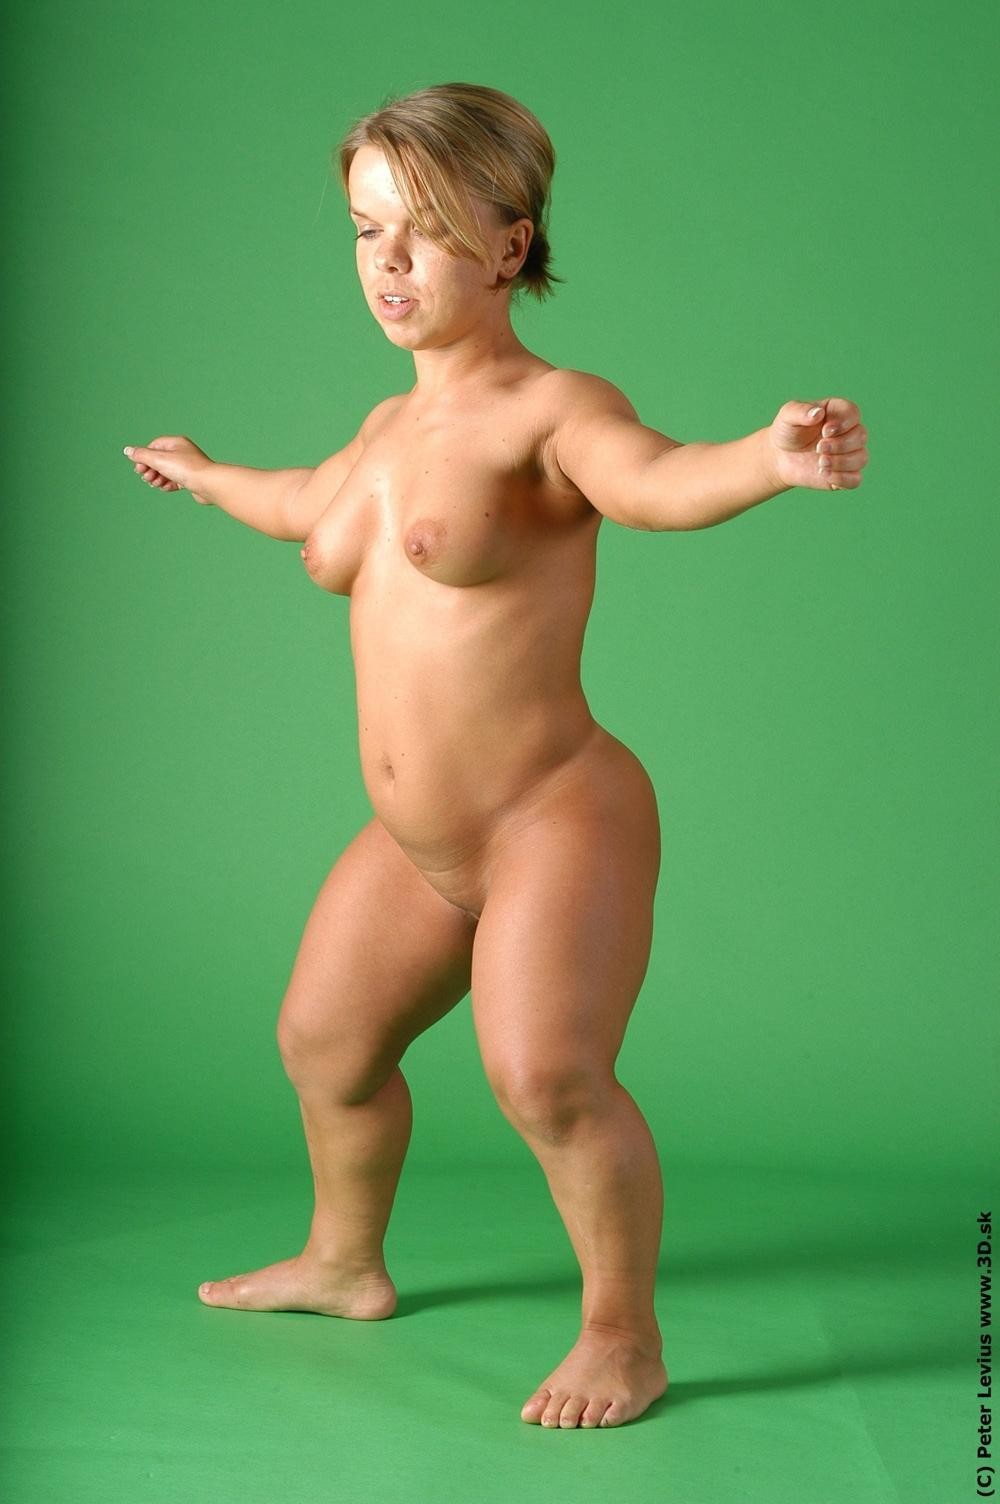 Total nude midgets free pics fucked gallery